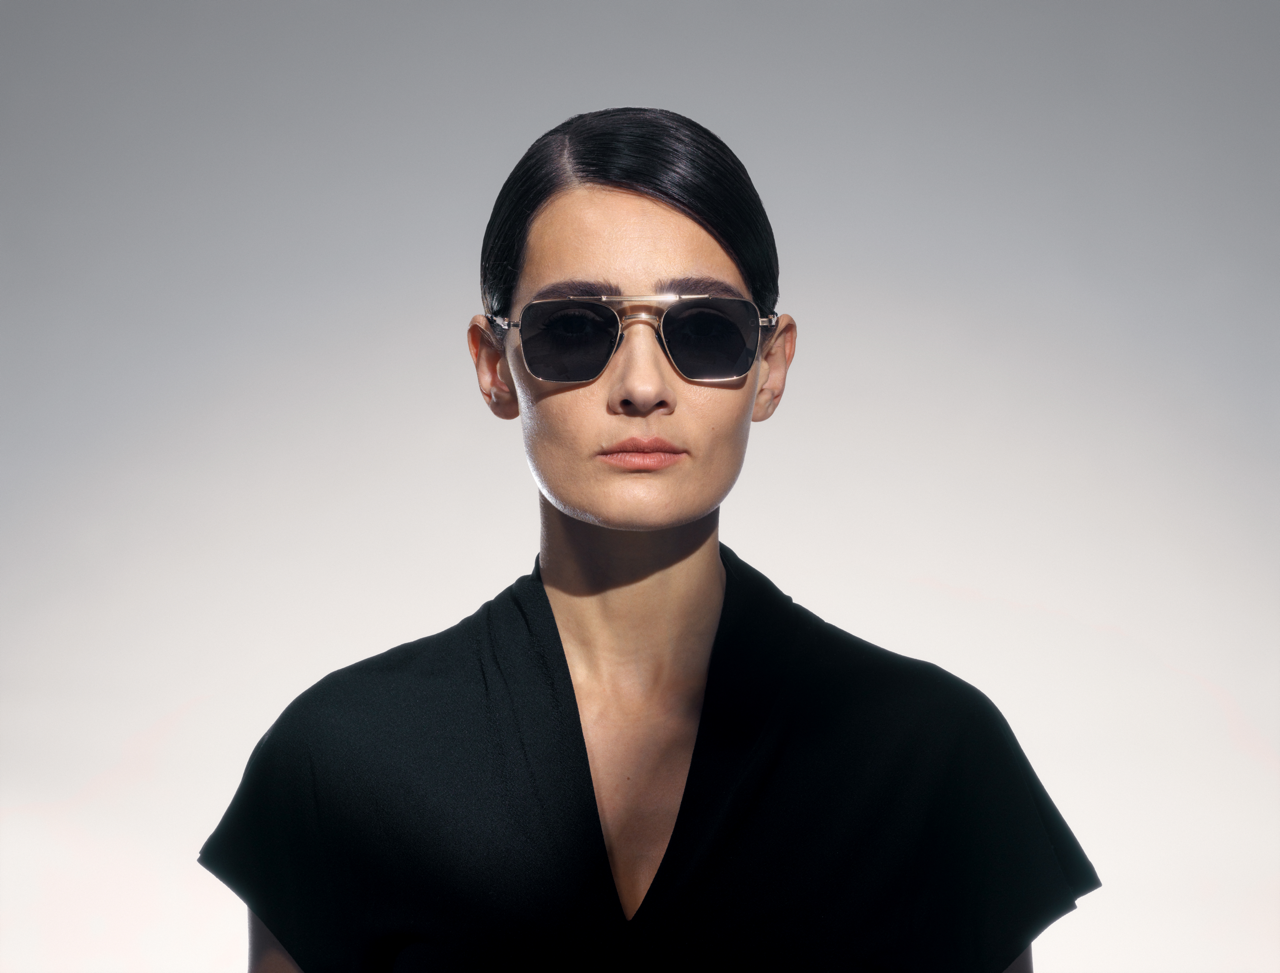 akoni europa sunglasses lifestyle front female